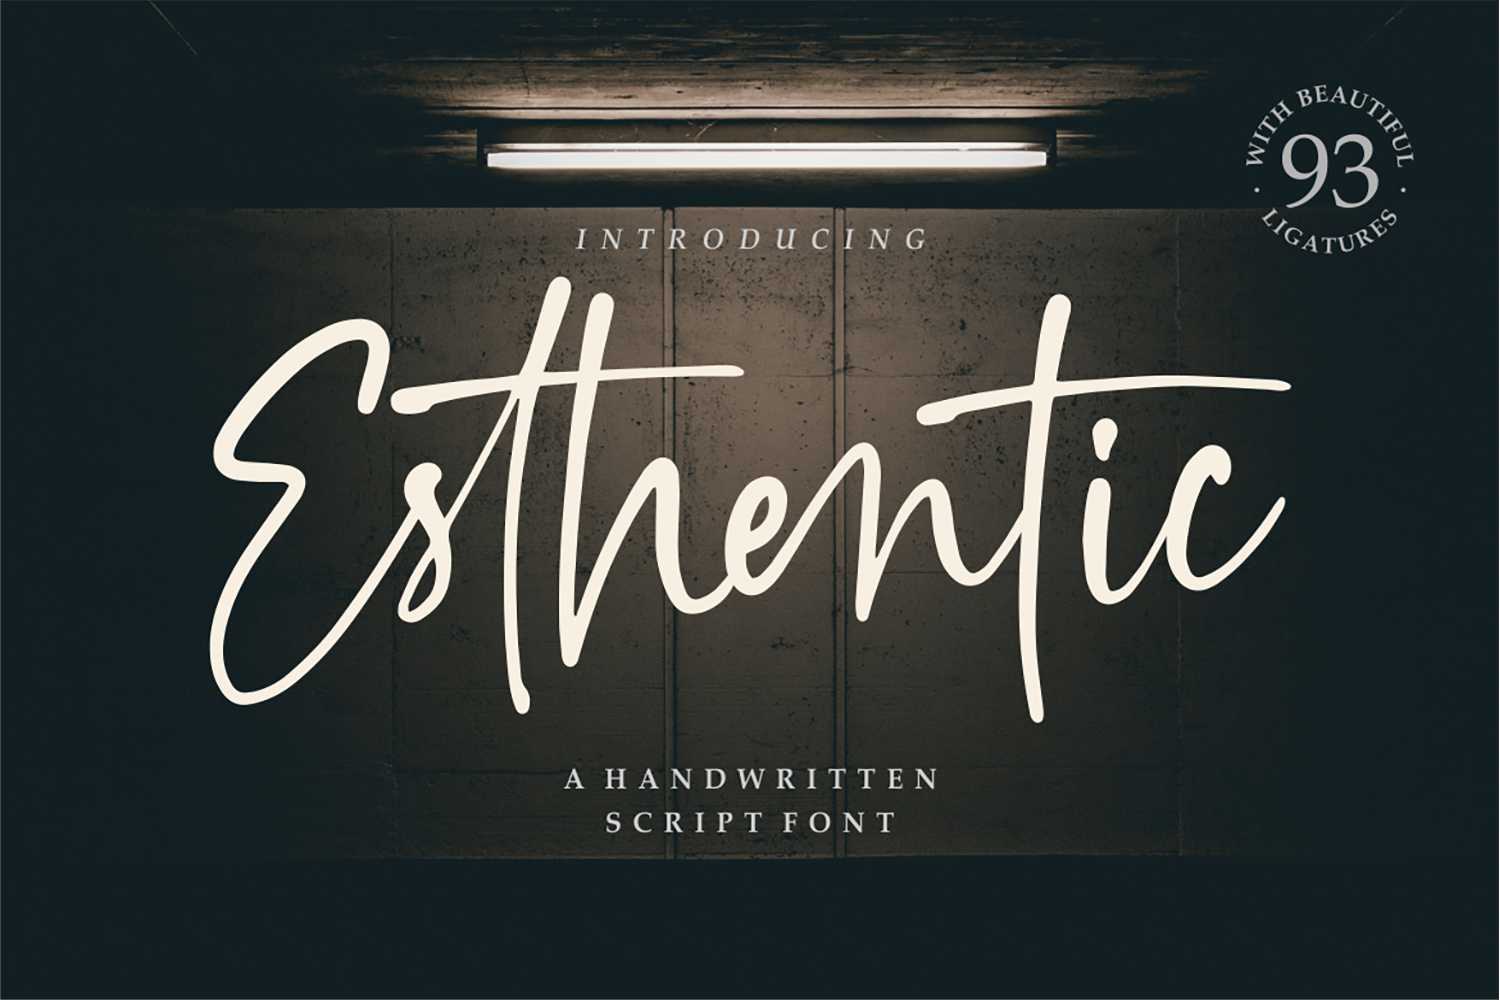 Esthentic Free Font